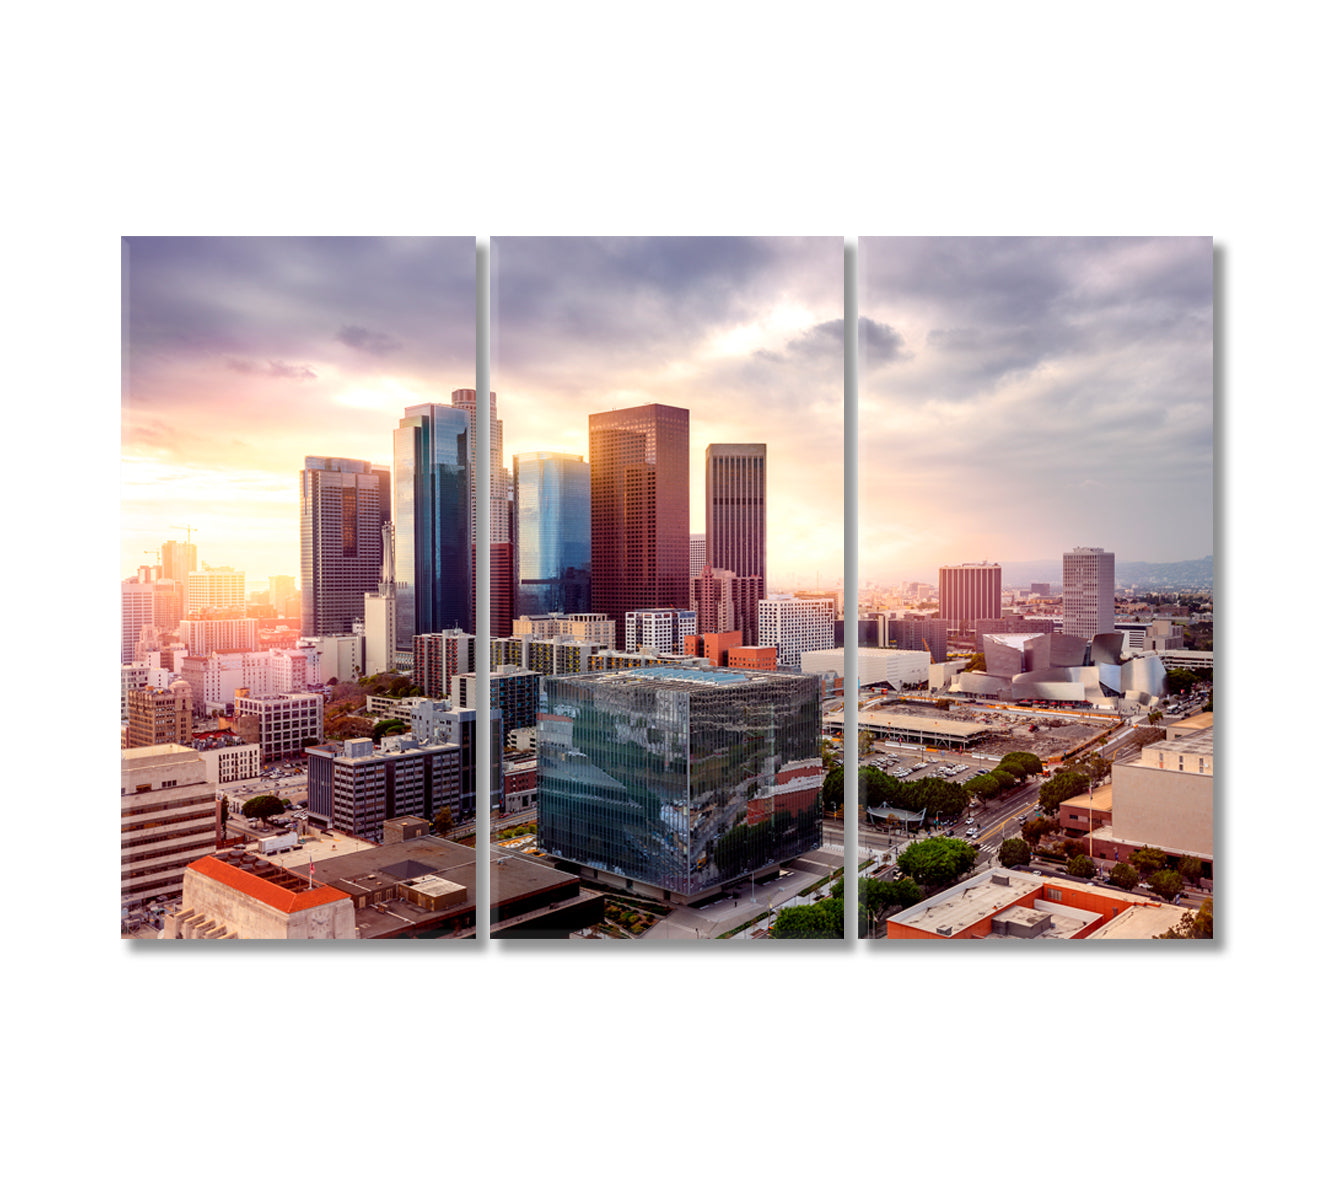 Downtown Los Angeles Skyline Canvas Print-Canvas Print-CetArt-3 Panels-36x24 inches-CetArt